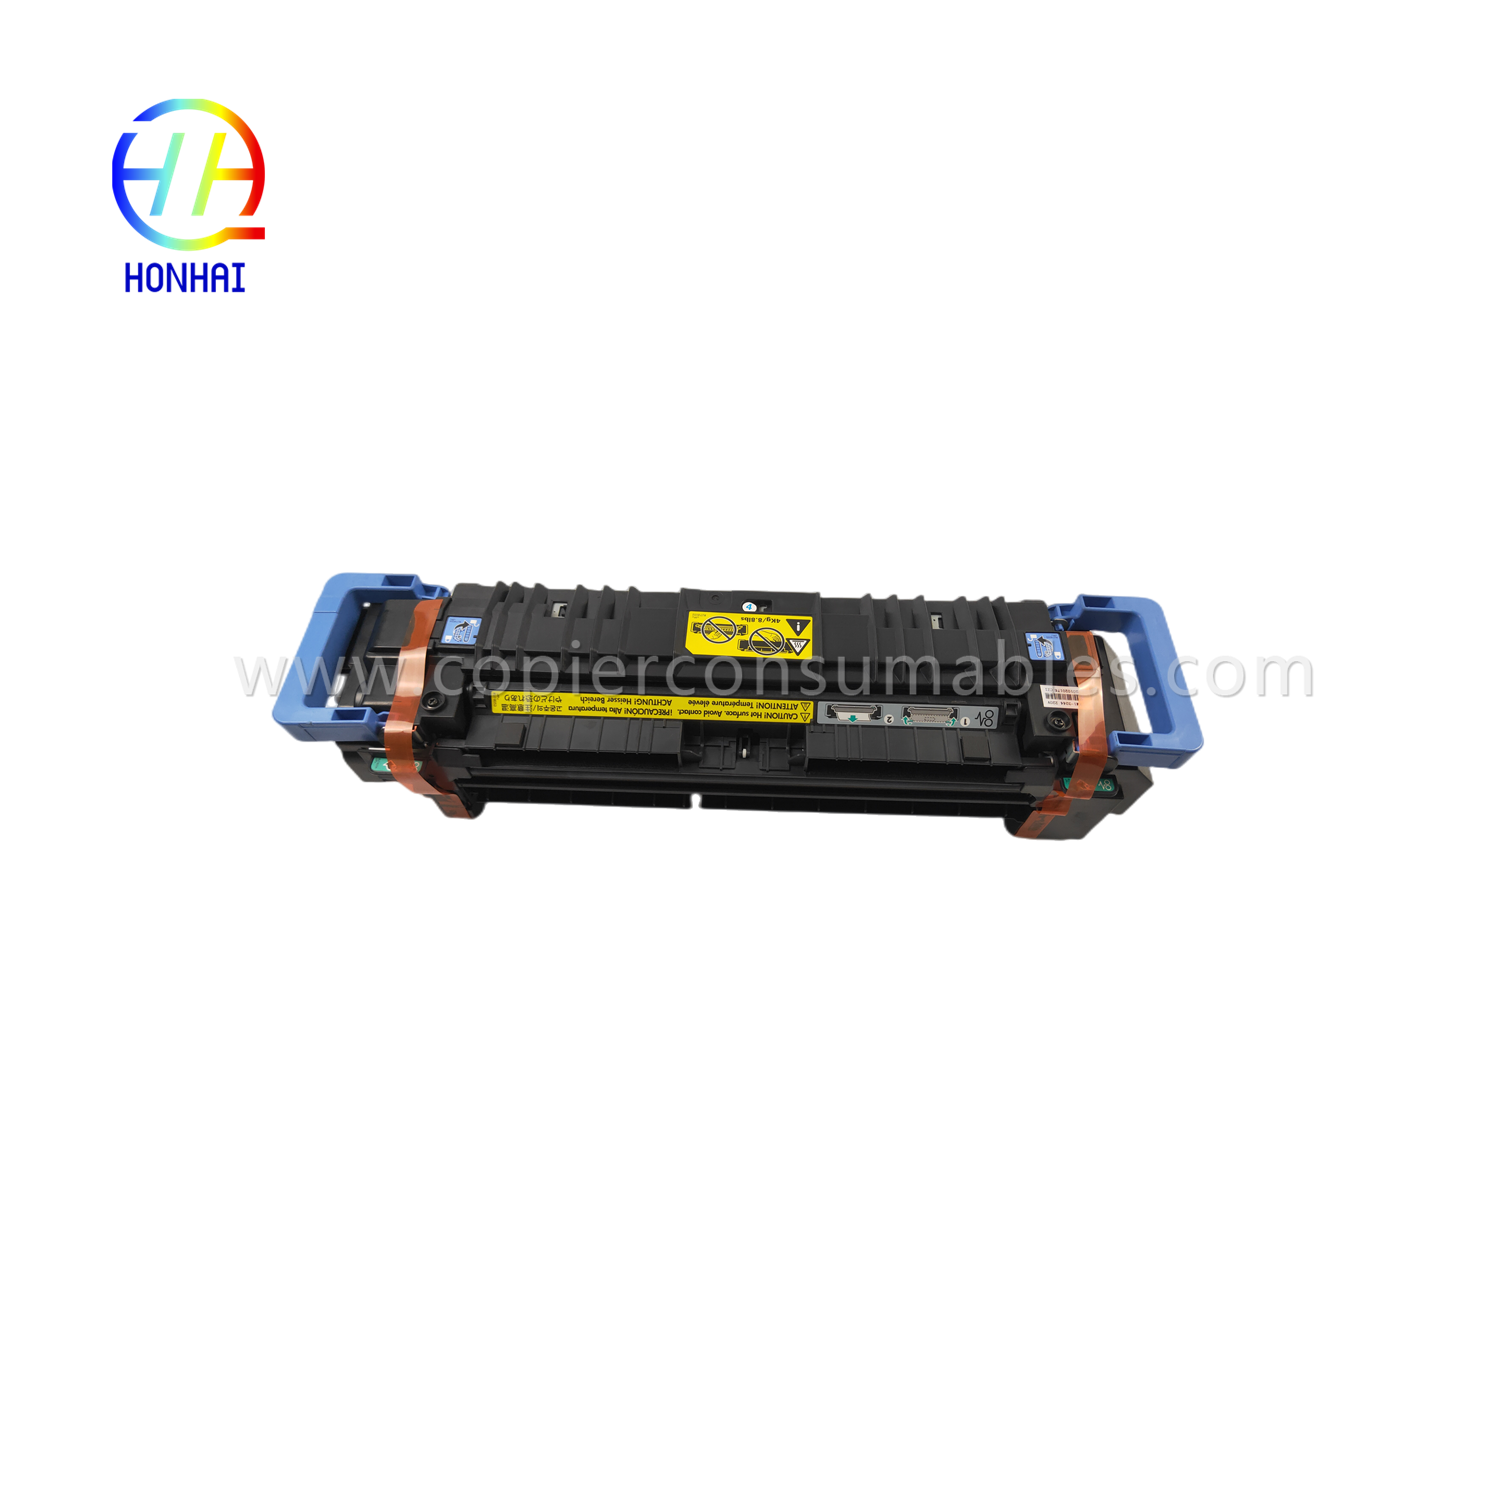 https://c585.goodao.net/fuser-assembly-unit-for-hp-m855-m880-m855dn-m855xh-m880z-m880z-c1n54-67901-c1n58-67901-fusing-assy-heating-fixing/